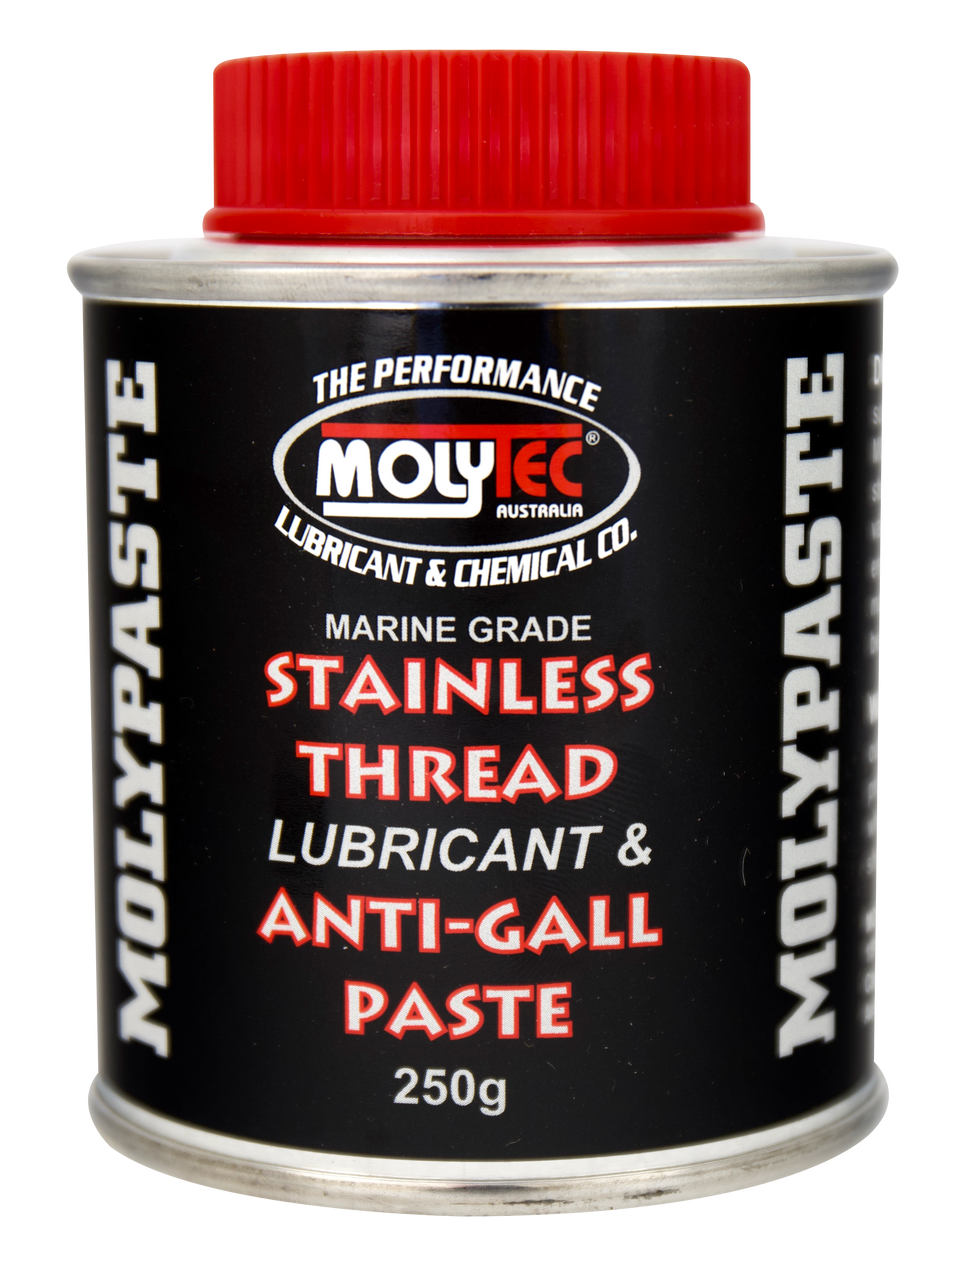 Molypaste Stainless Thread Lubricant Anti-Gall Paste Marine Grade 250G Brush Top Tin